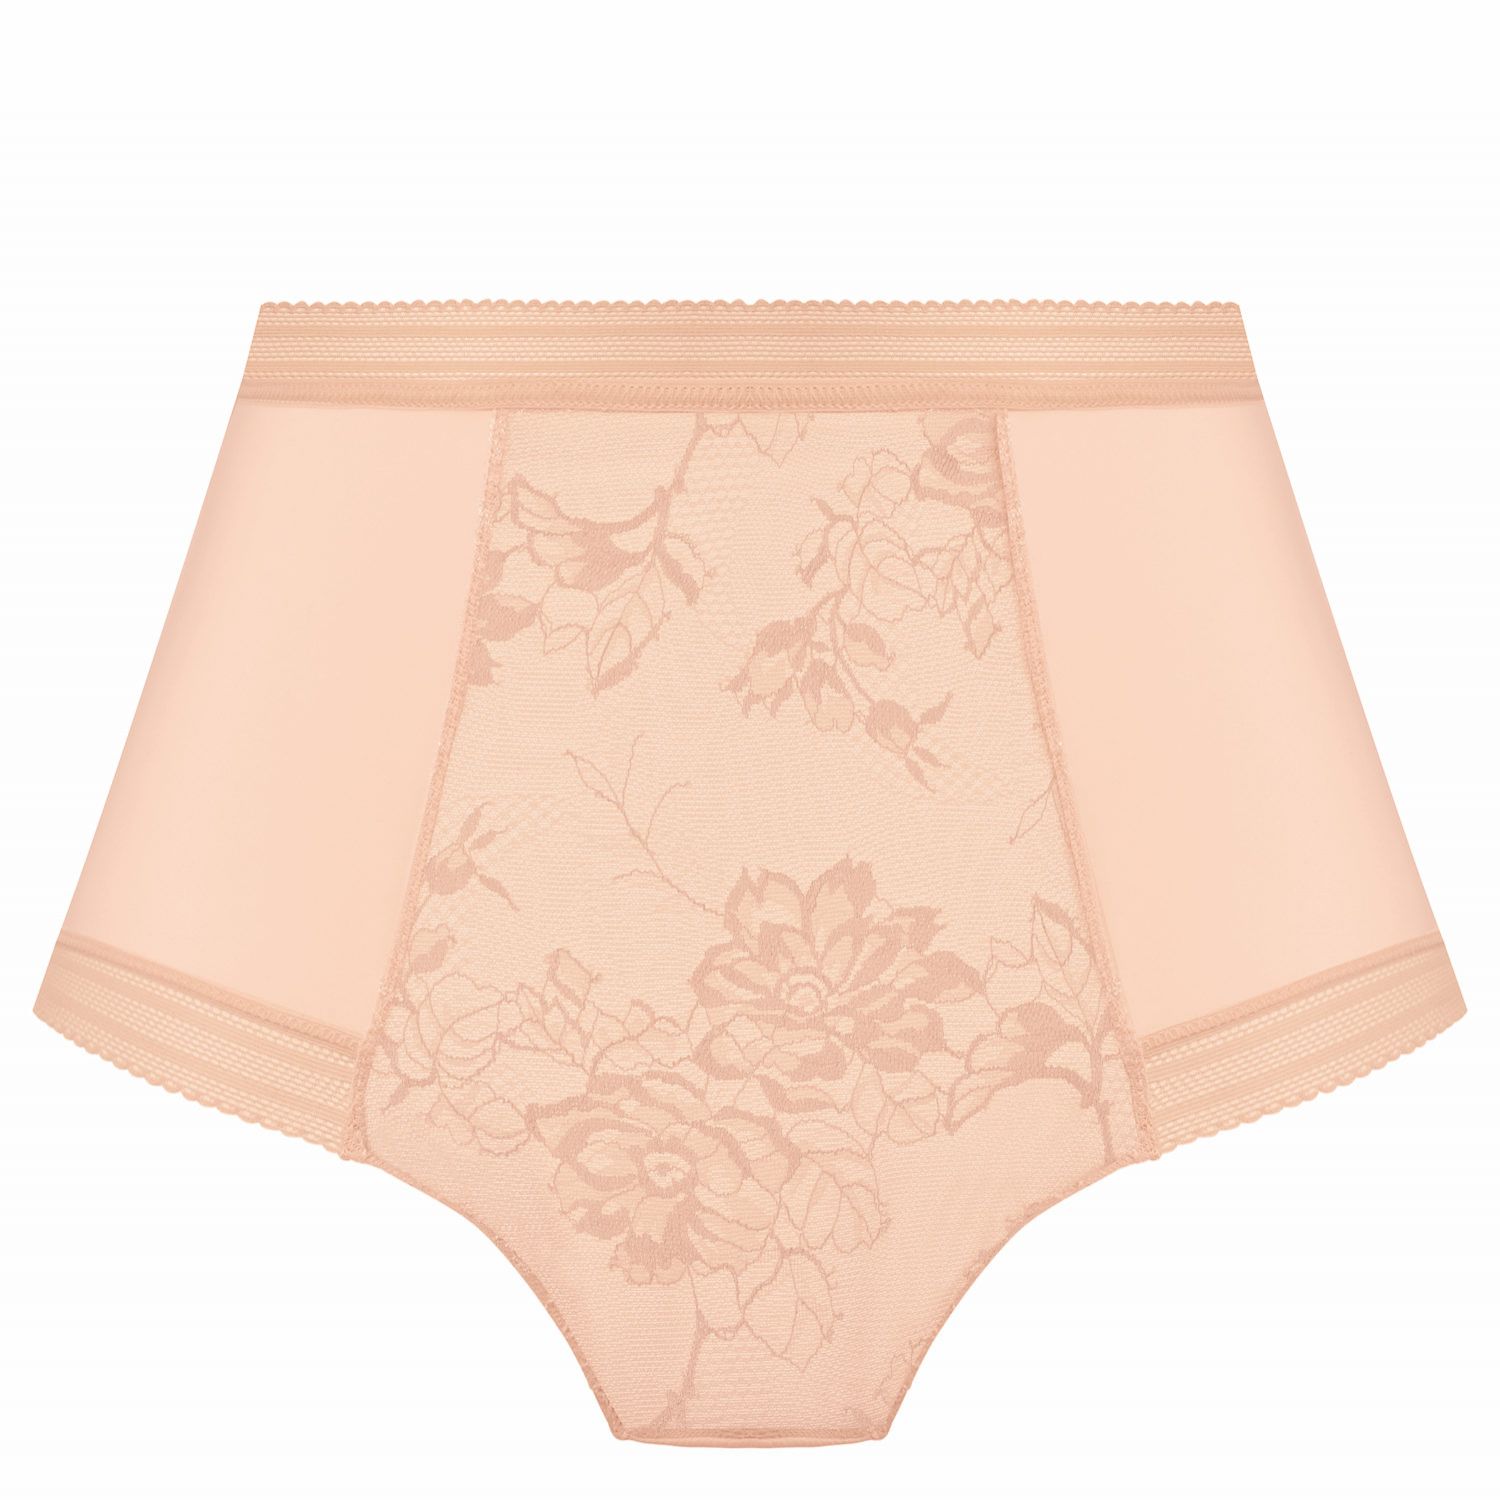 https://www.lumingerie.com/images/products/fusion-lace-fl102352-high-waist-brief-blush-f-cutout_orig.jpg